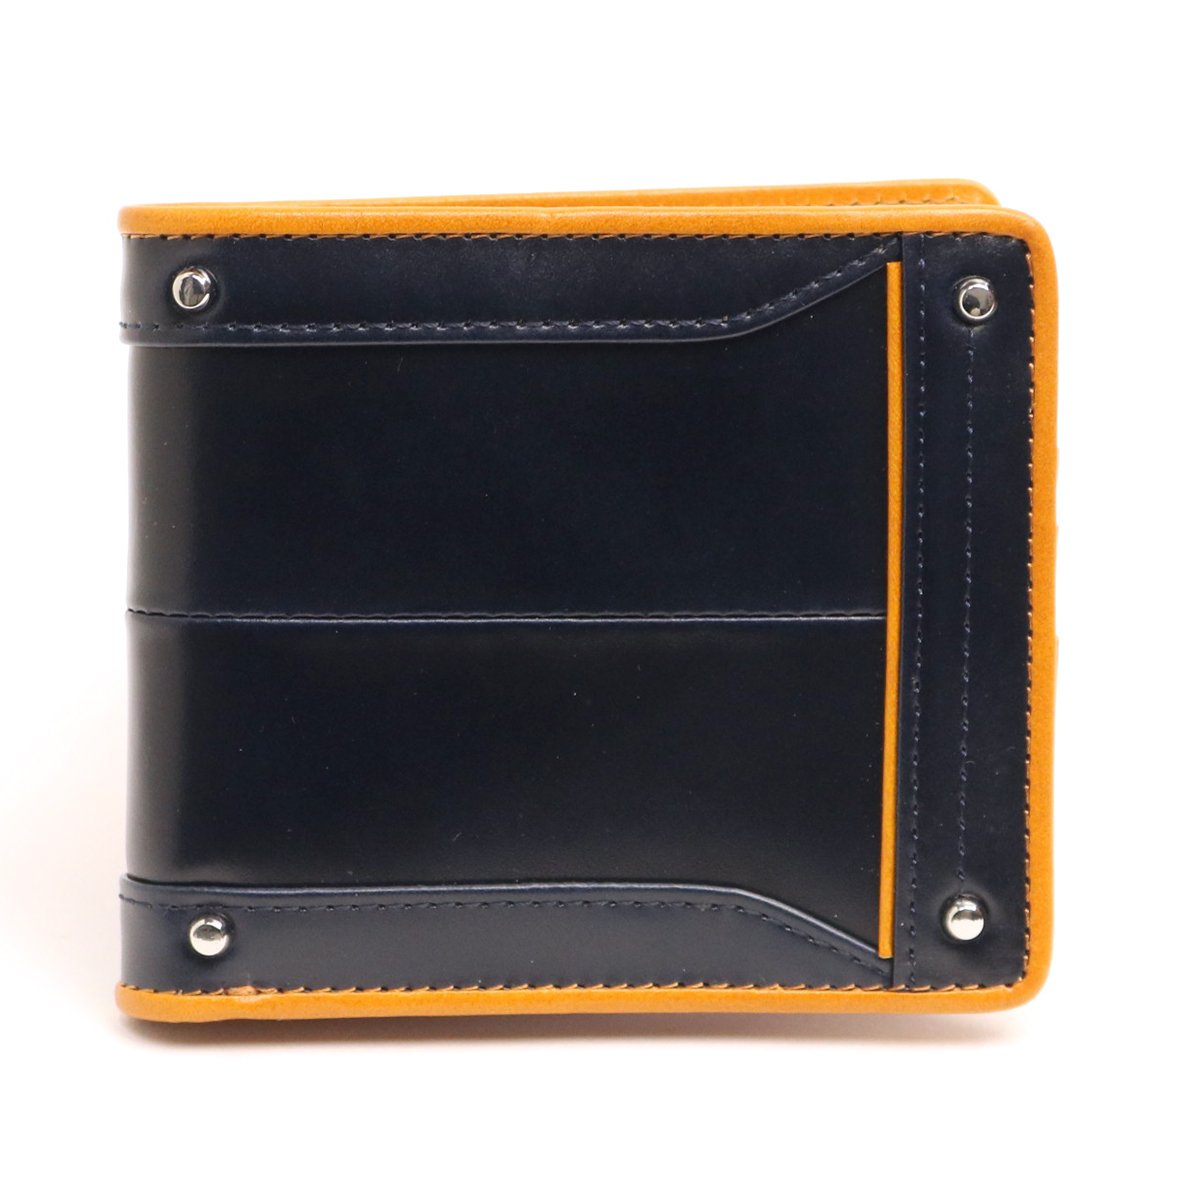 Kiefer neu / Ciao Beautiful uneven dyed leather bi-fold wallet